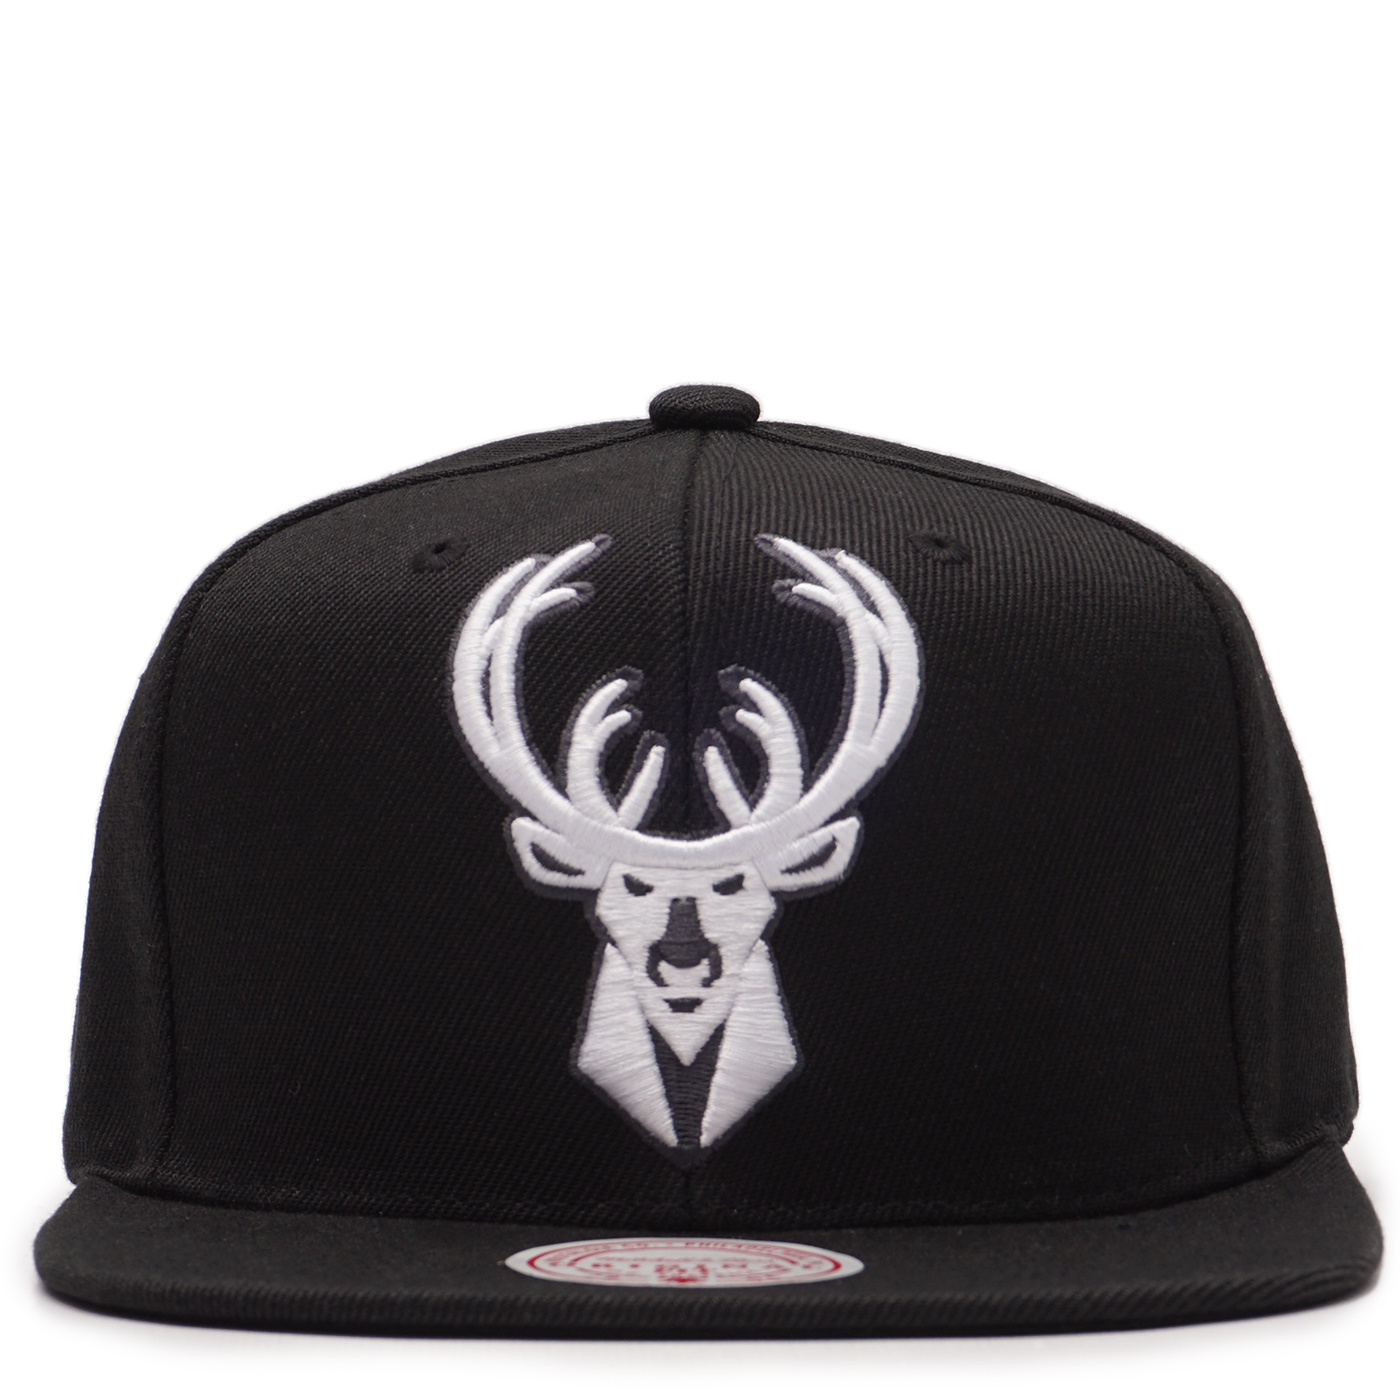 Milwaukee Bucks MONOCHROME XL-LOGO Grey-Black Fitted Hat